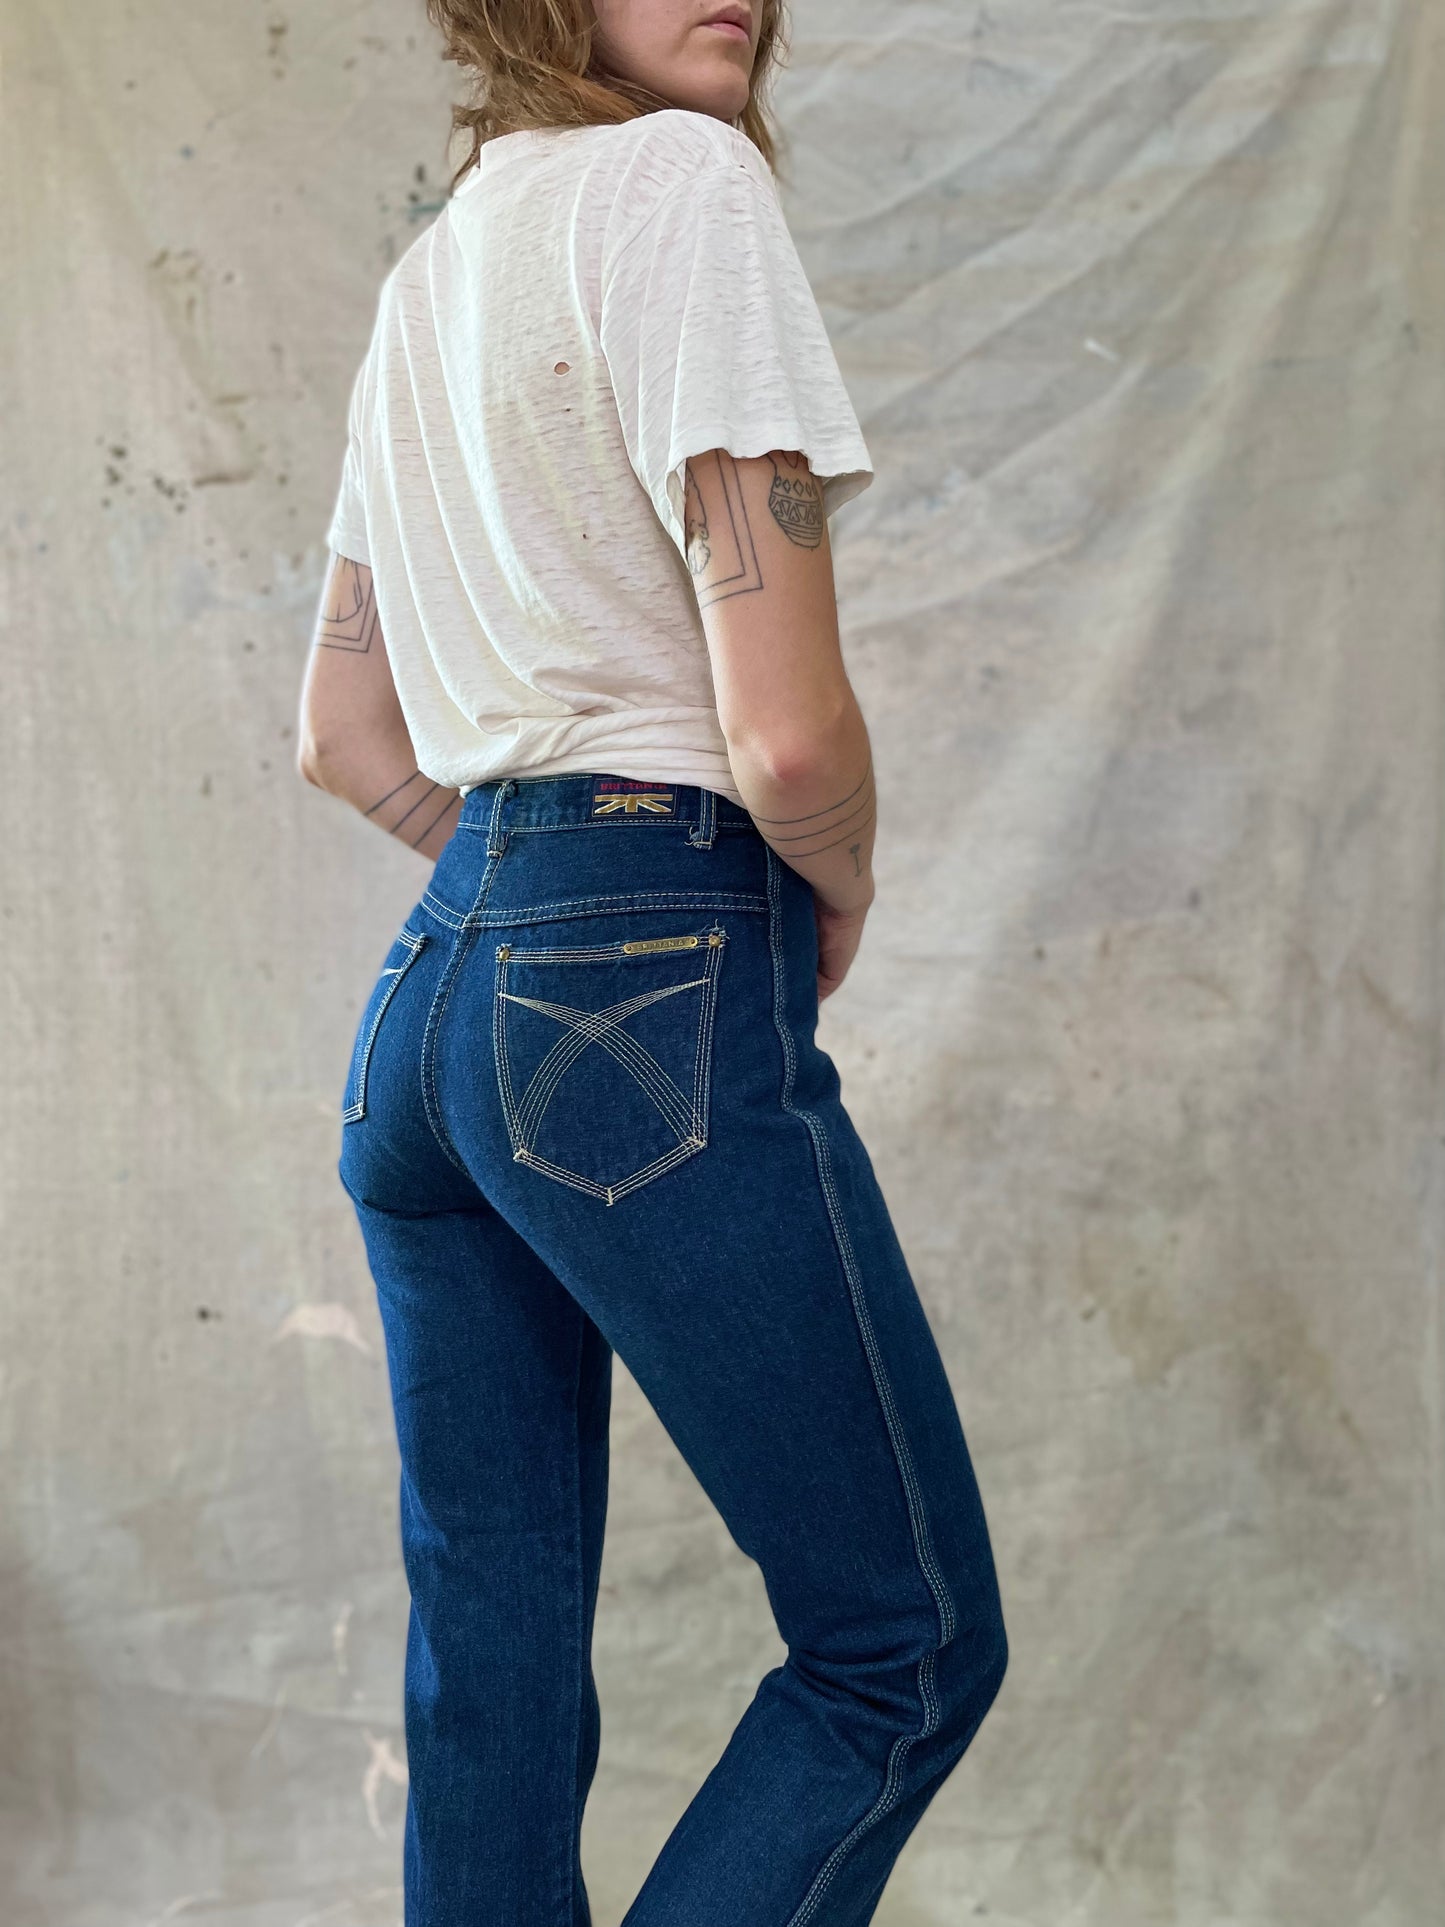 80s Brittania Indigo Dyed Jeans